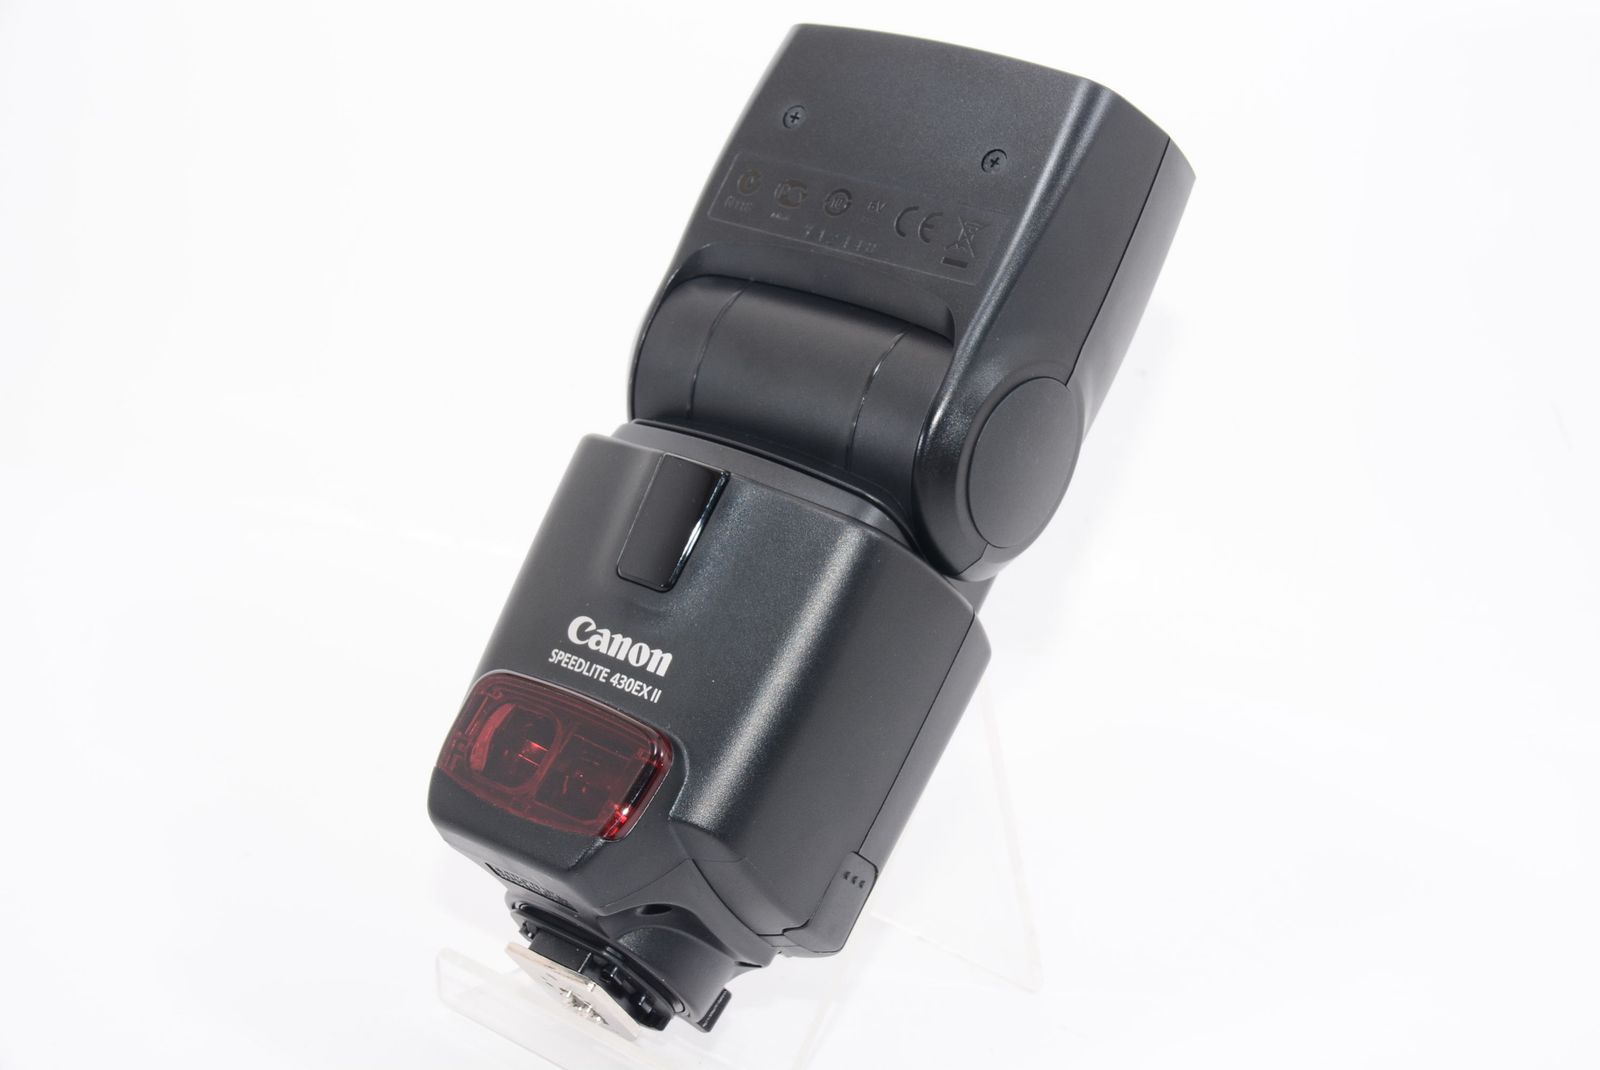 Canon フラッシュ スピードライト 430EX II SP430EX2 - カメラアクセサリー